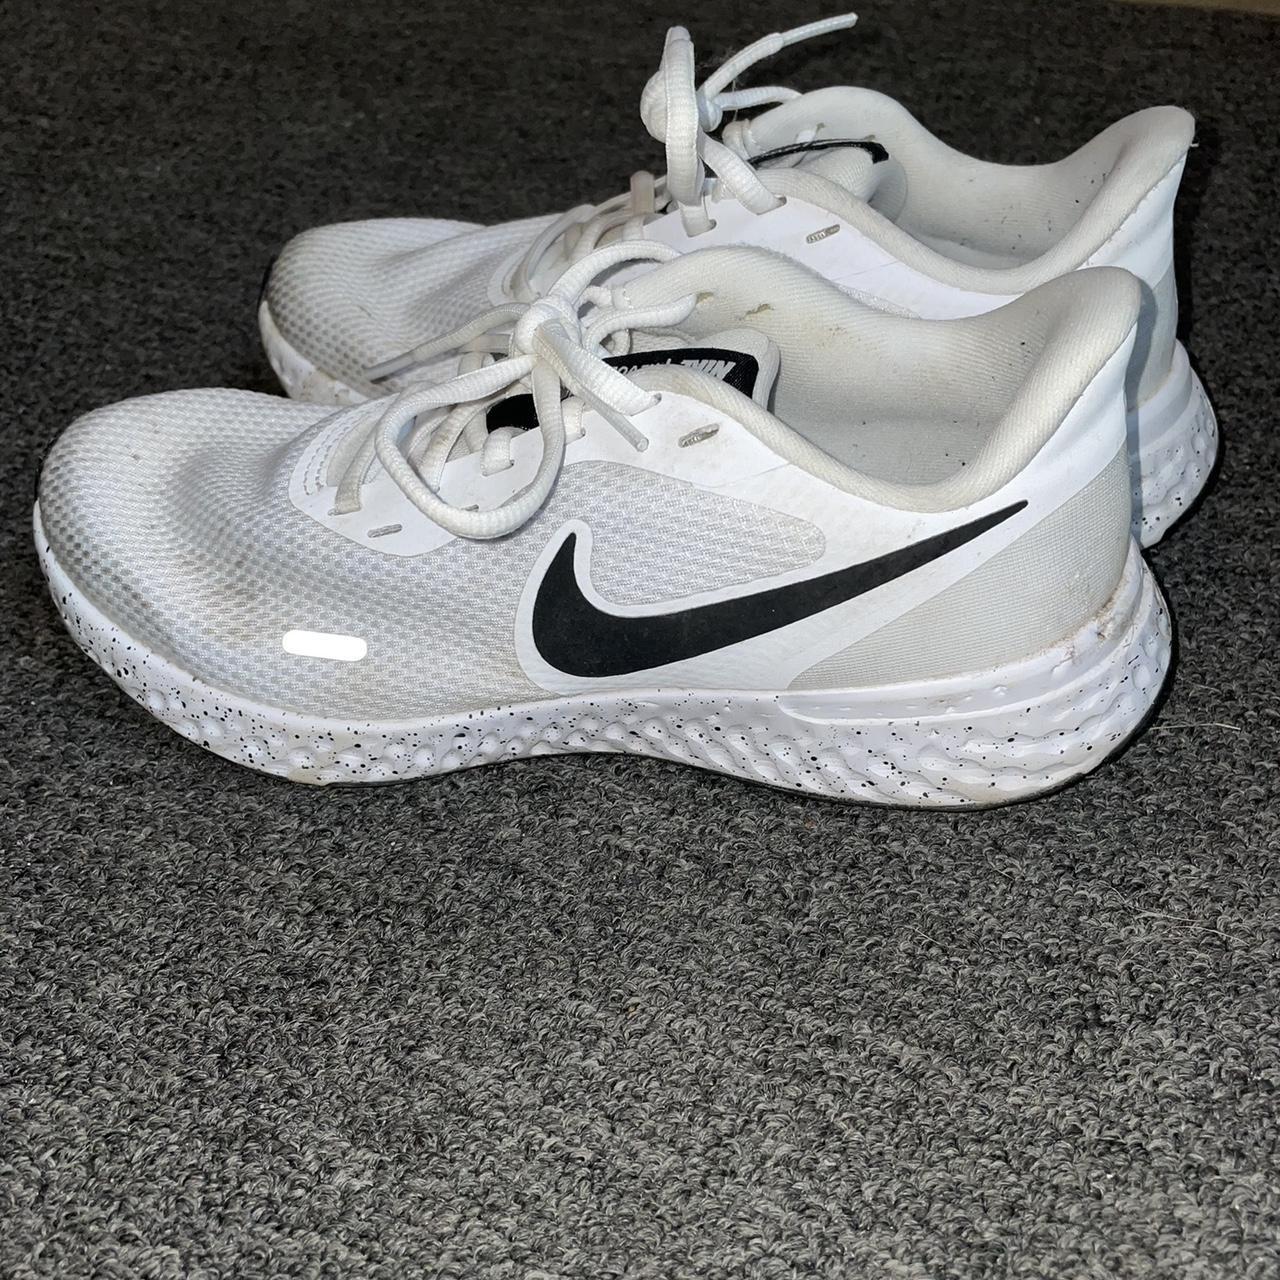 Nike running shoes - Depop